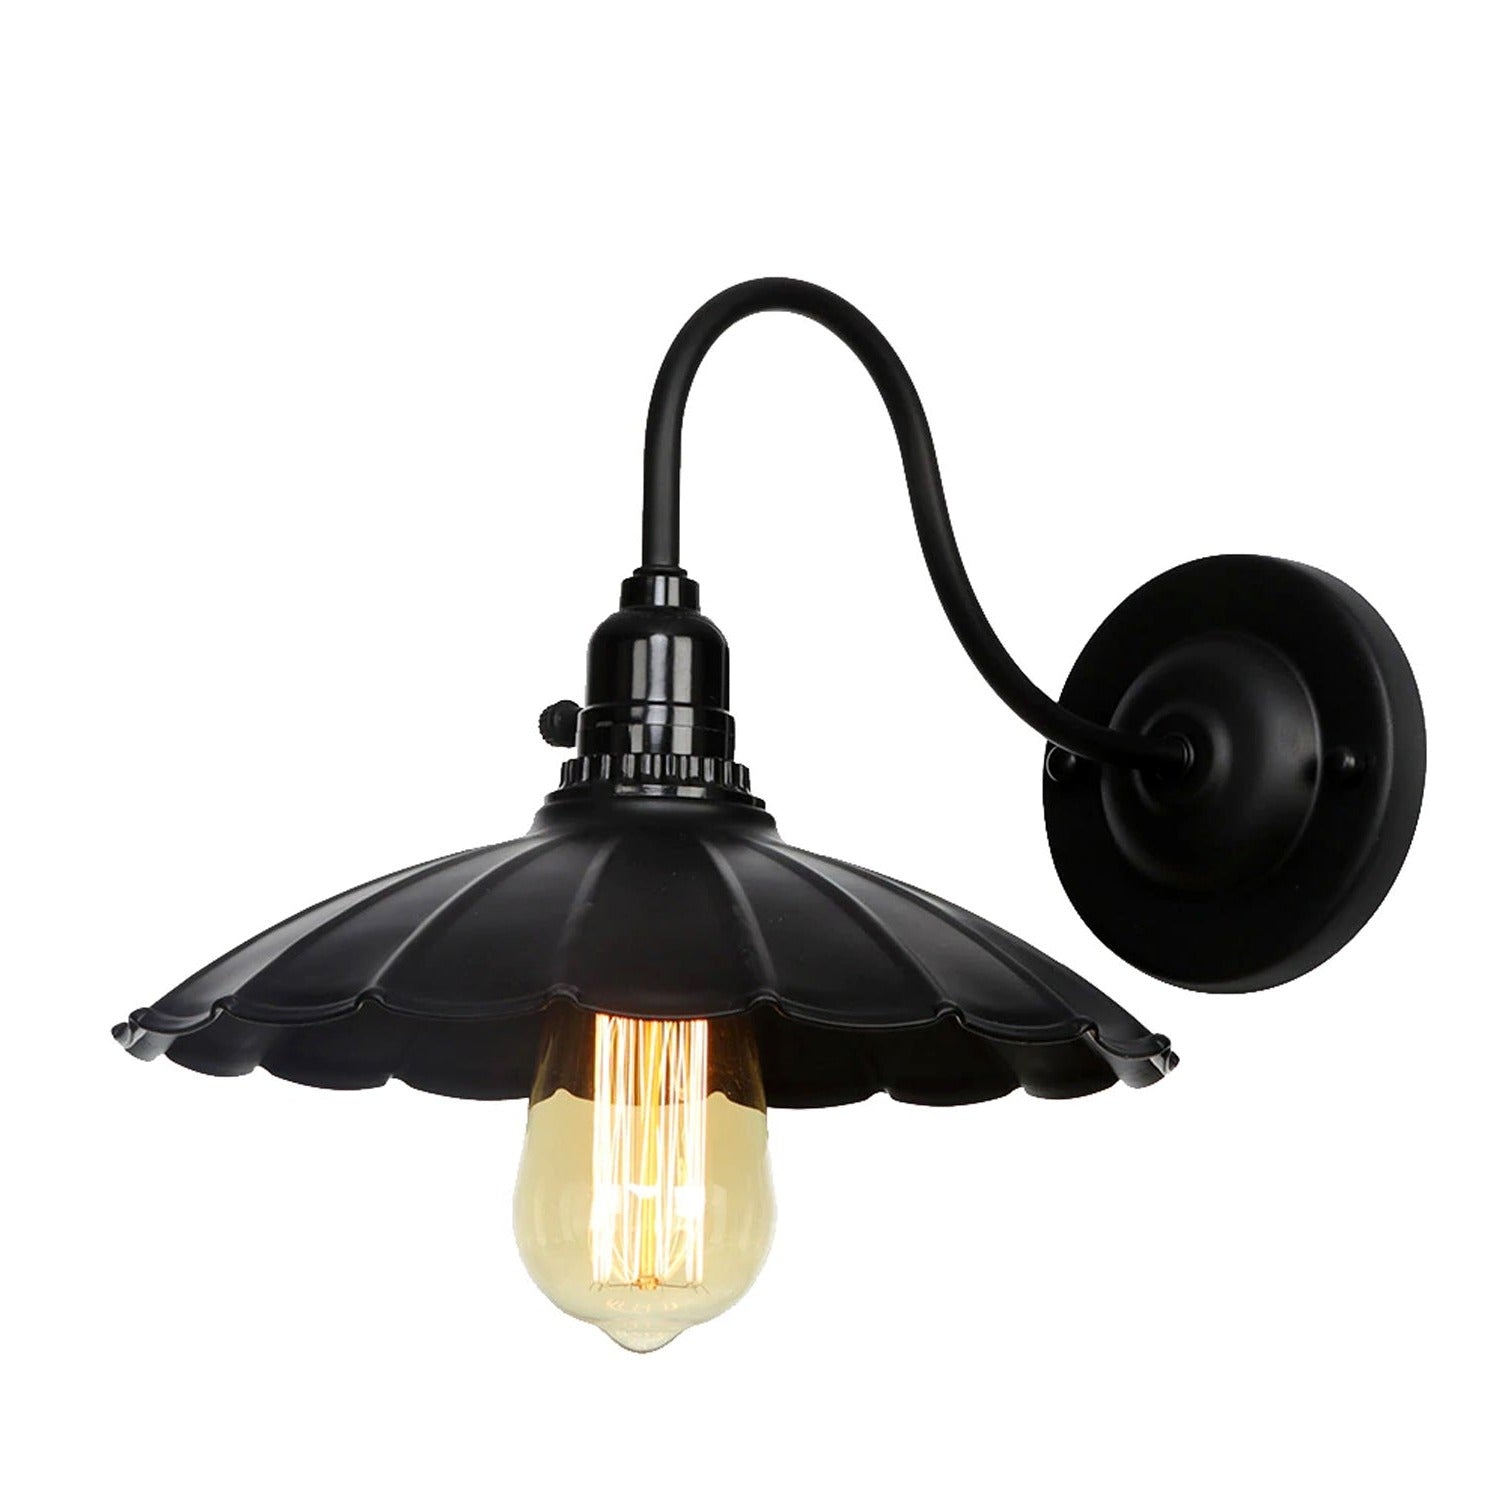 Black Retro Vintage Industrial Wall Mounted Light Rustic Sconce Lamp Fixture~2676 - LEDSone UK Ltd